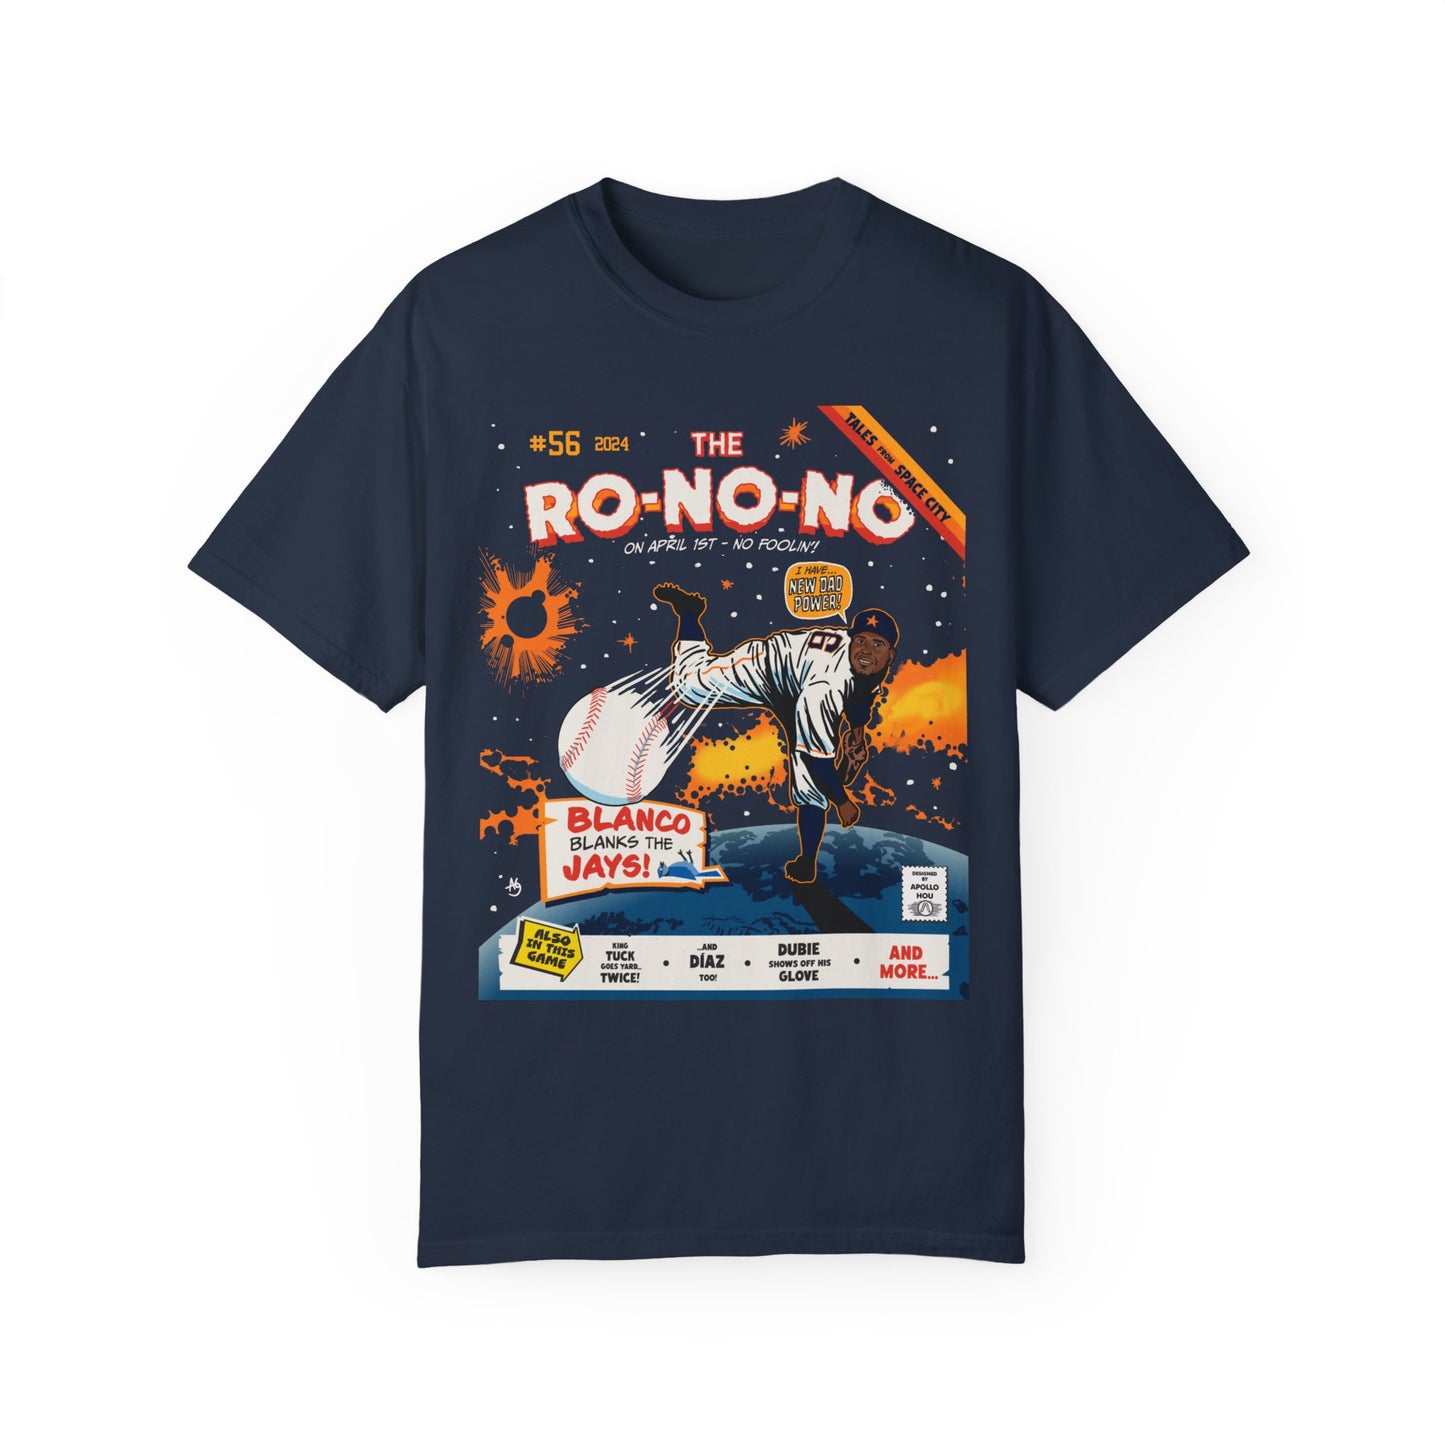 The Ro-No-No Unisex Comfort Colors T-shirt